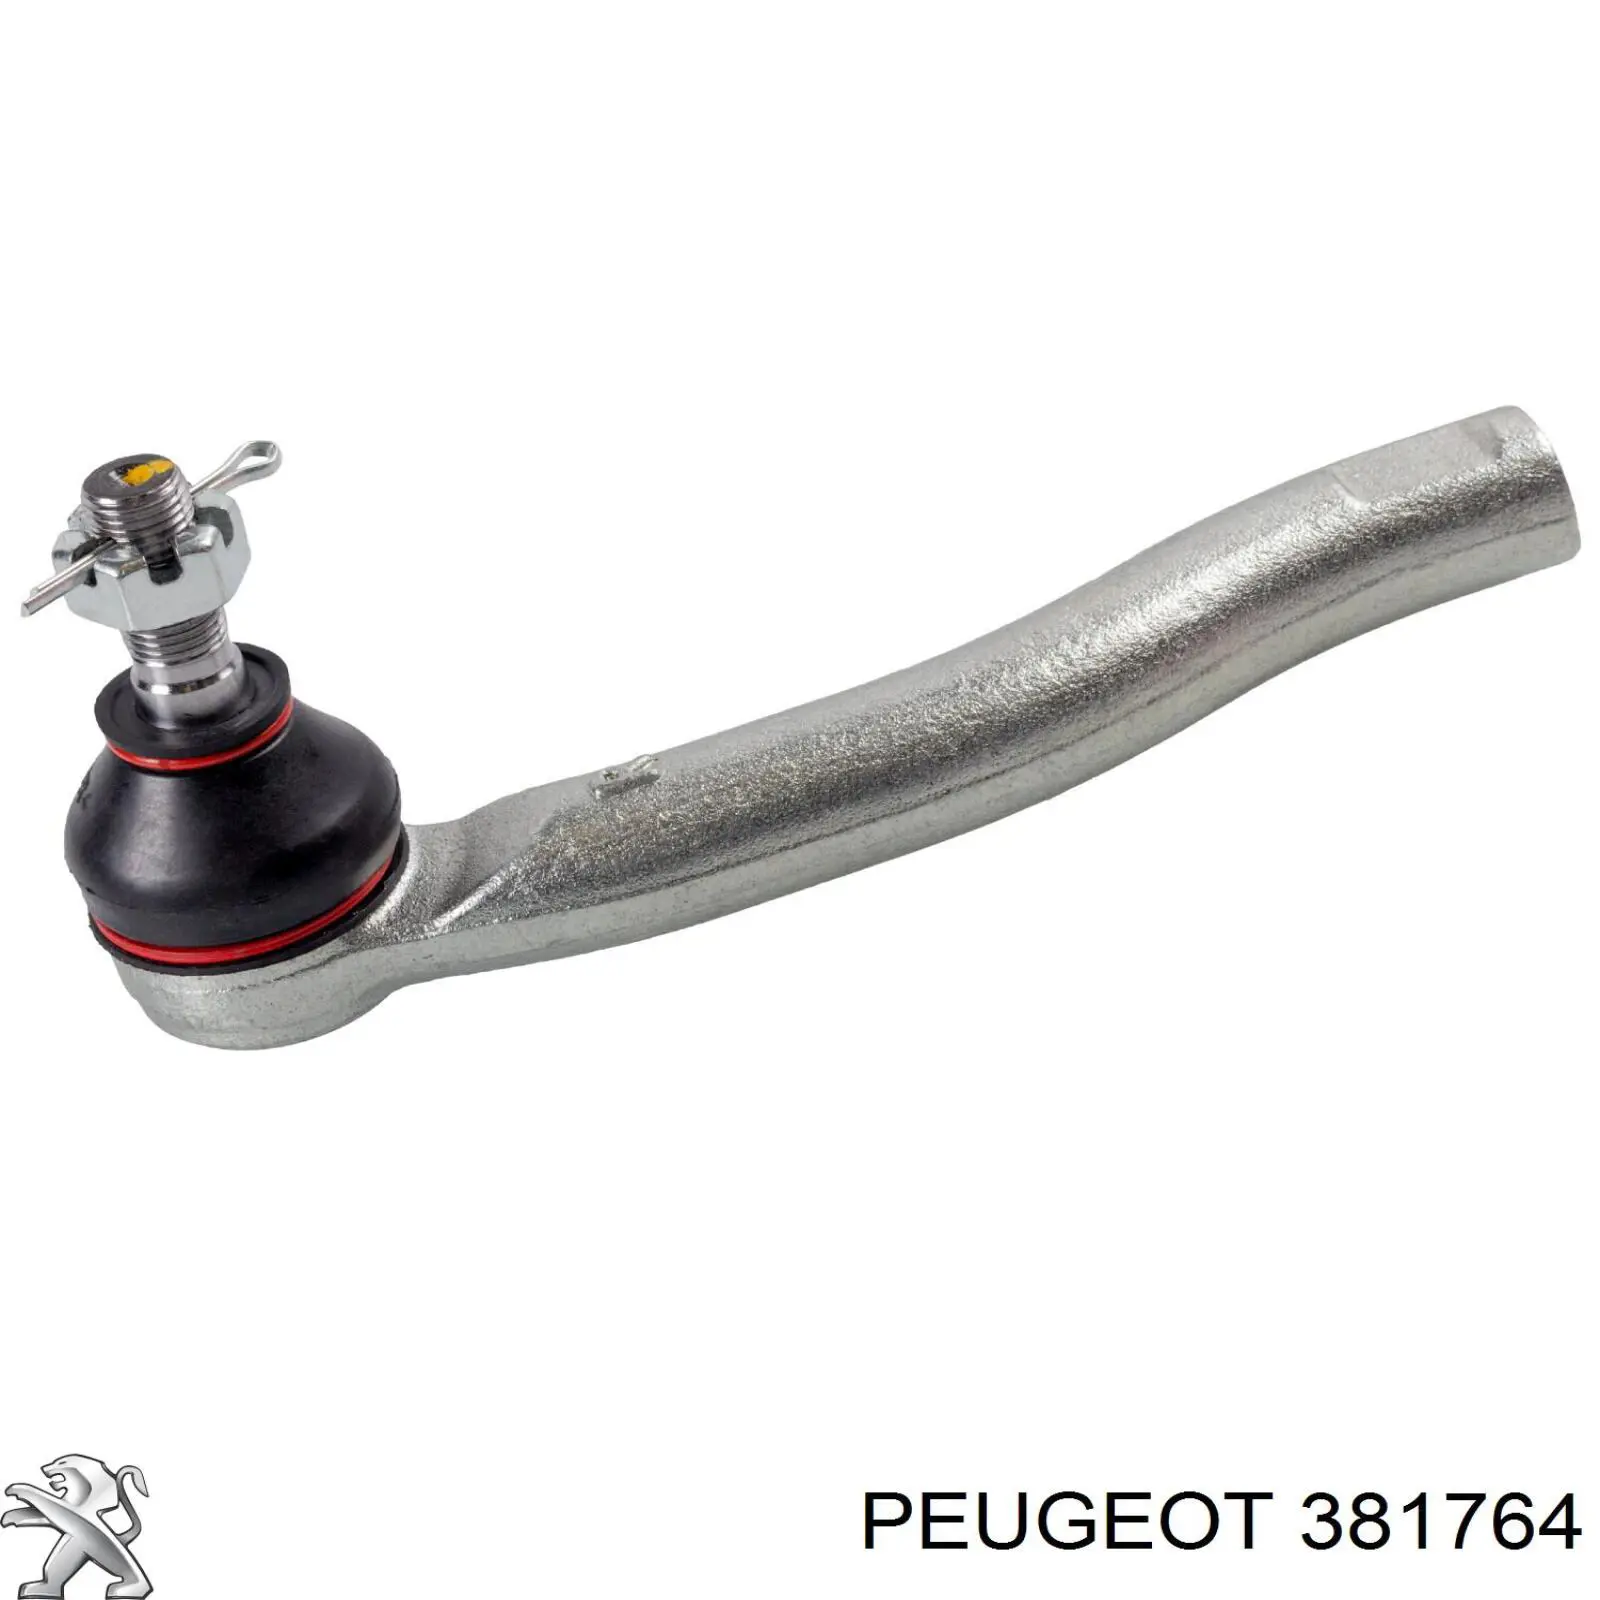 Рулевой наконечник PEUGEOT 381764